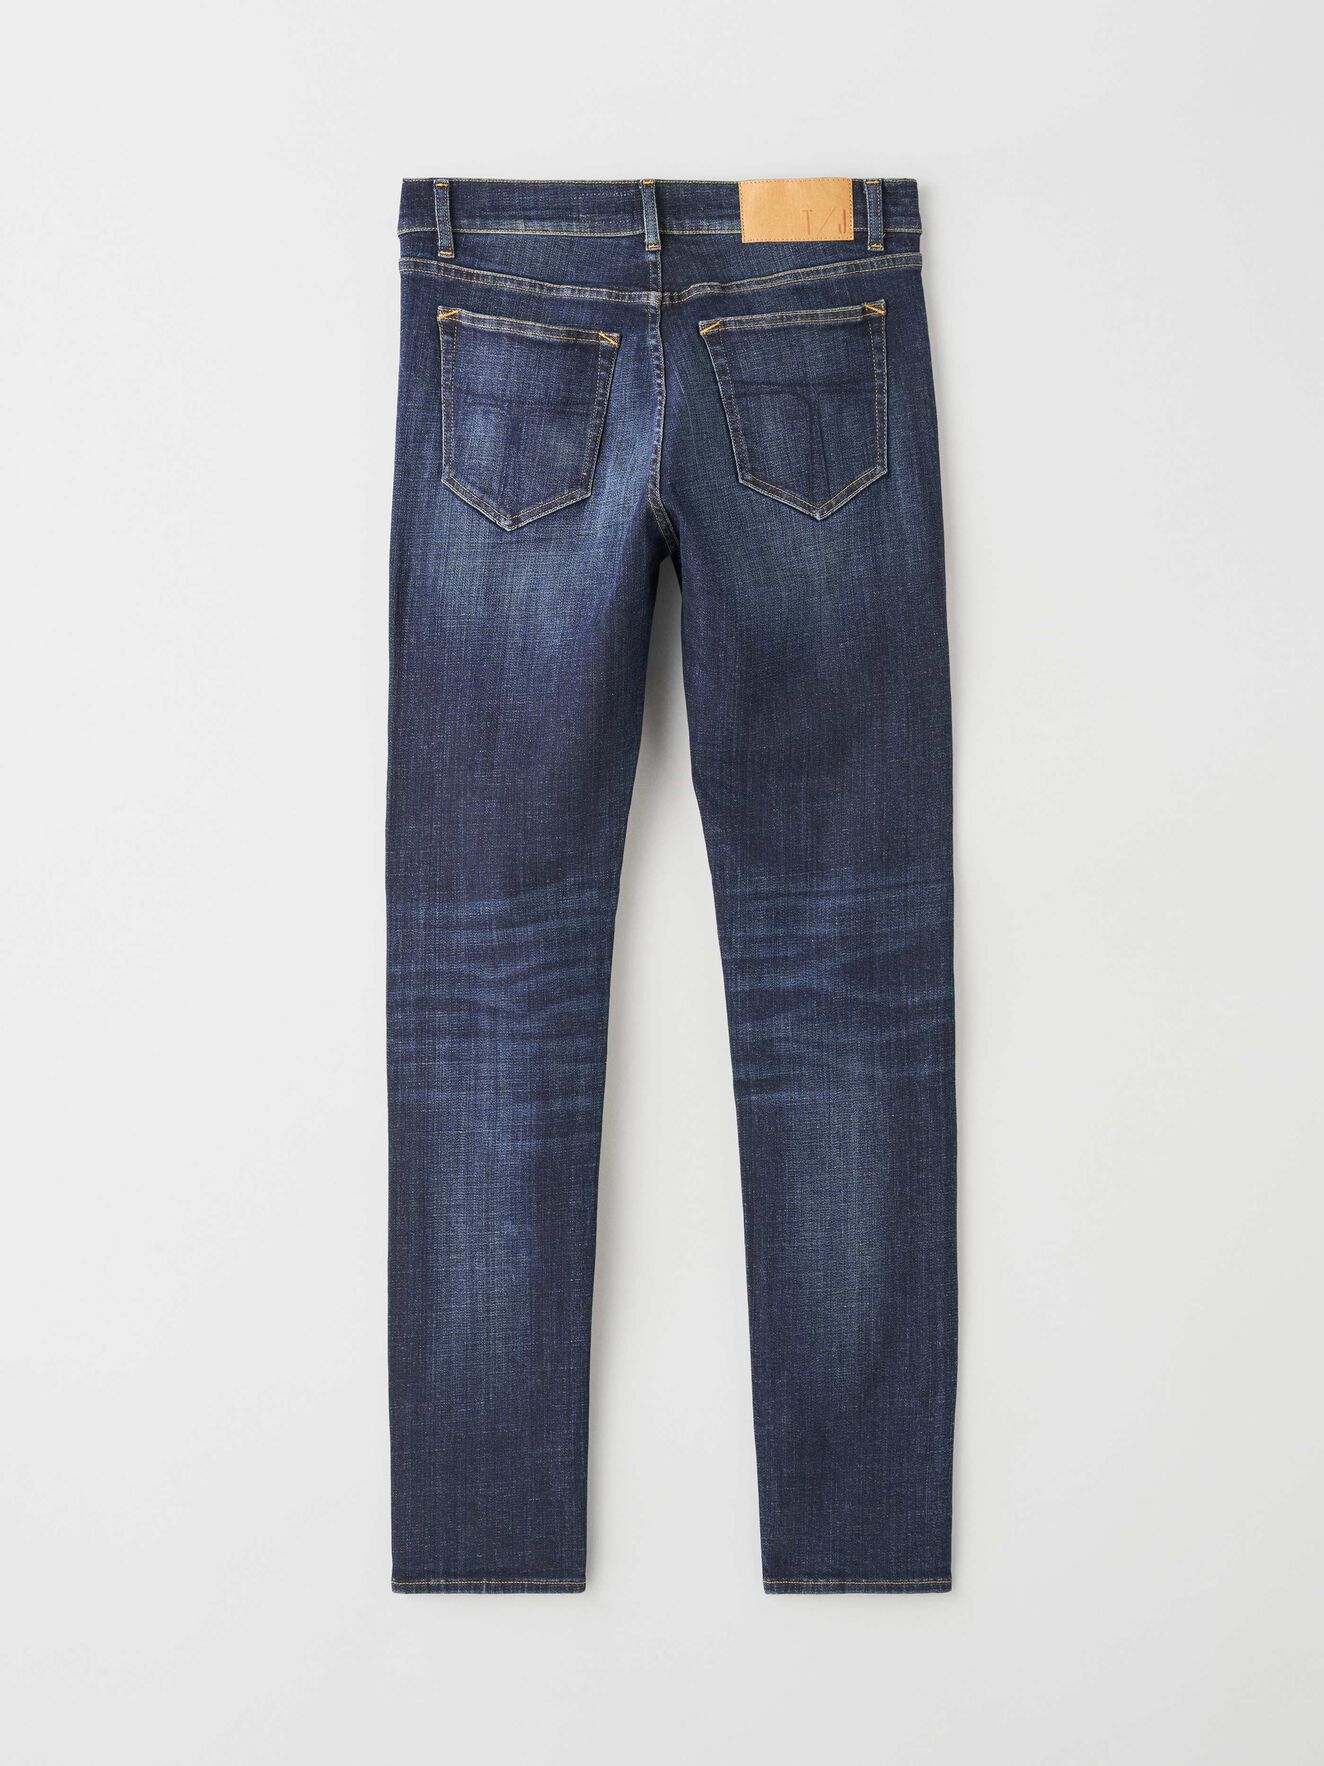 Leon Jeans - Buy online